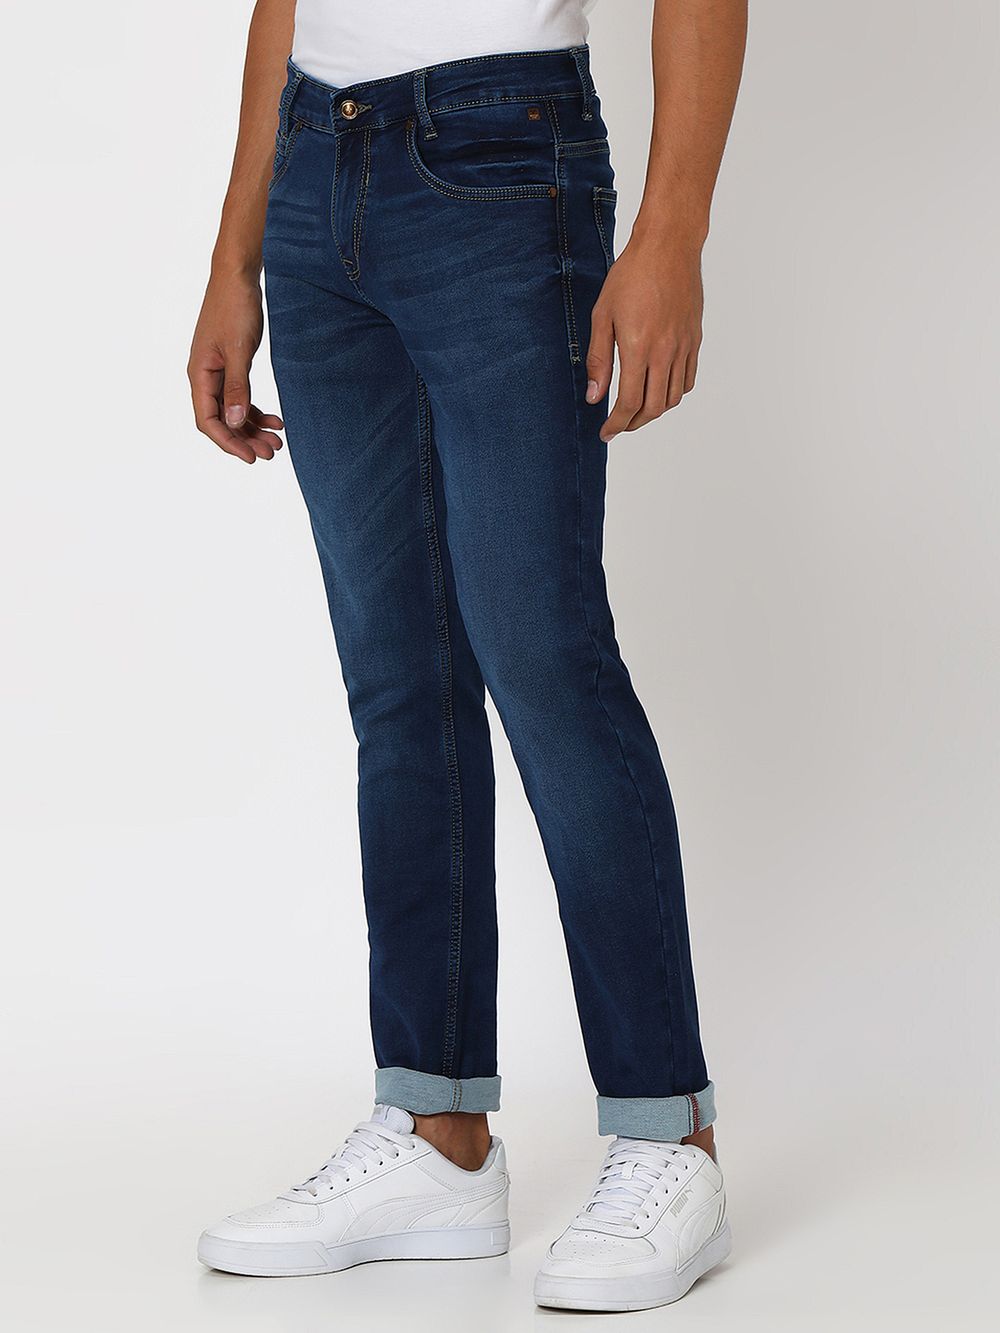 Indigo Blue Narrow Fit Denim Deluxe Stretch Jeans